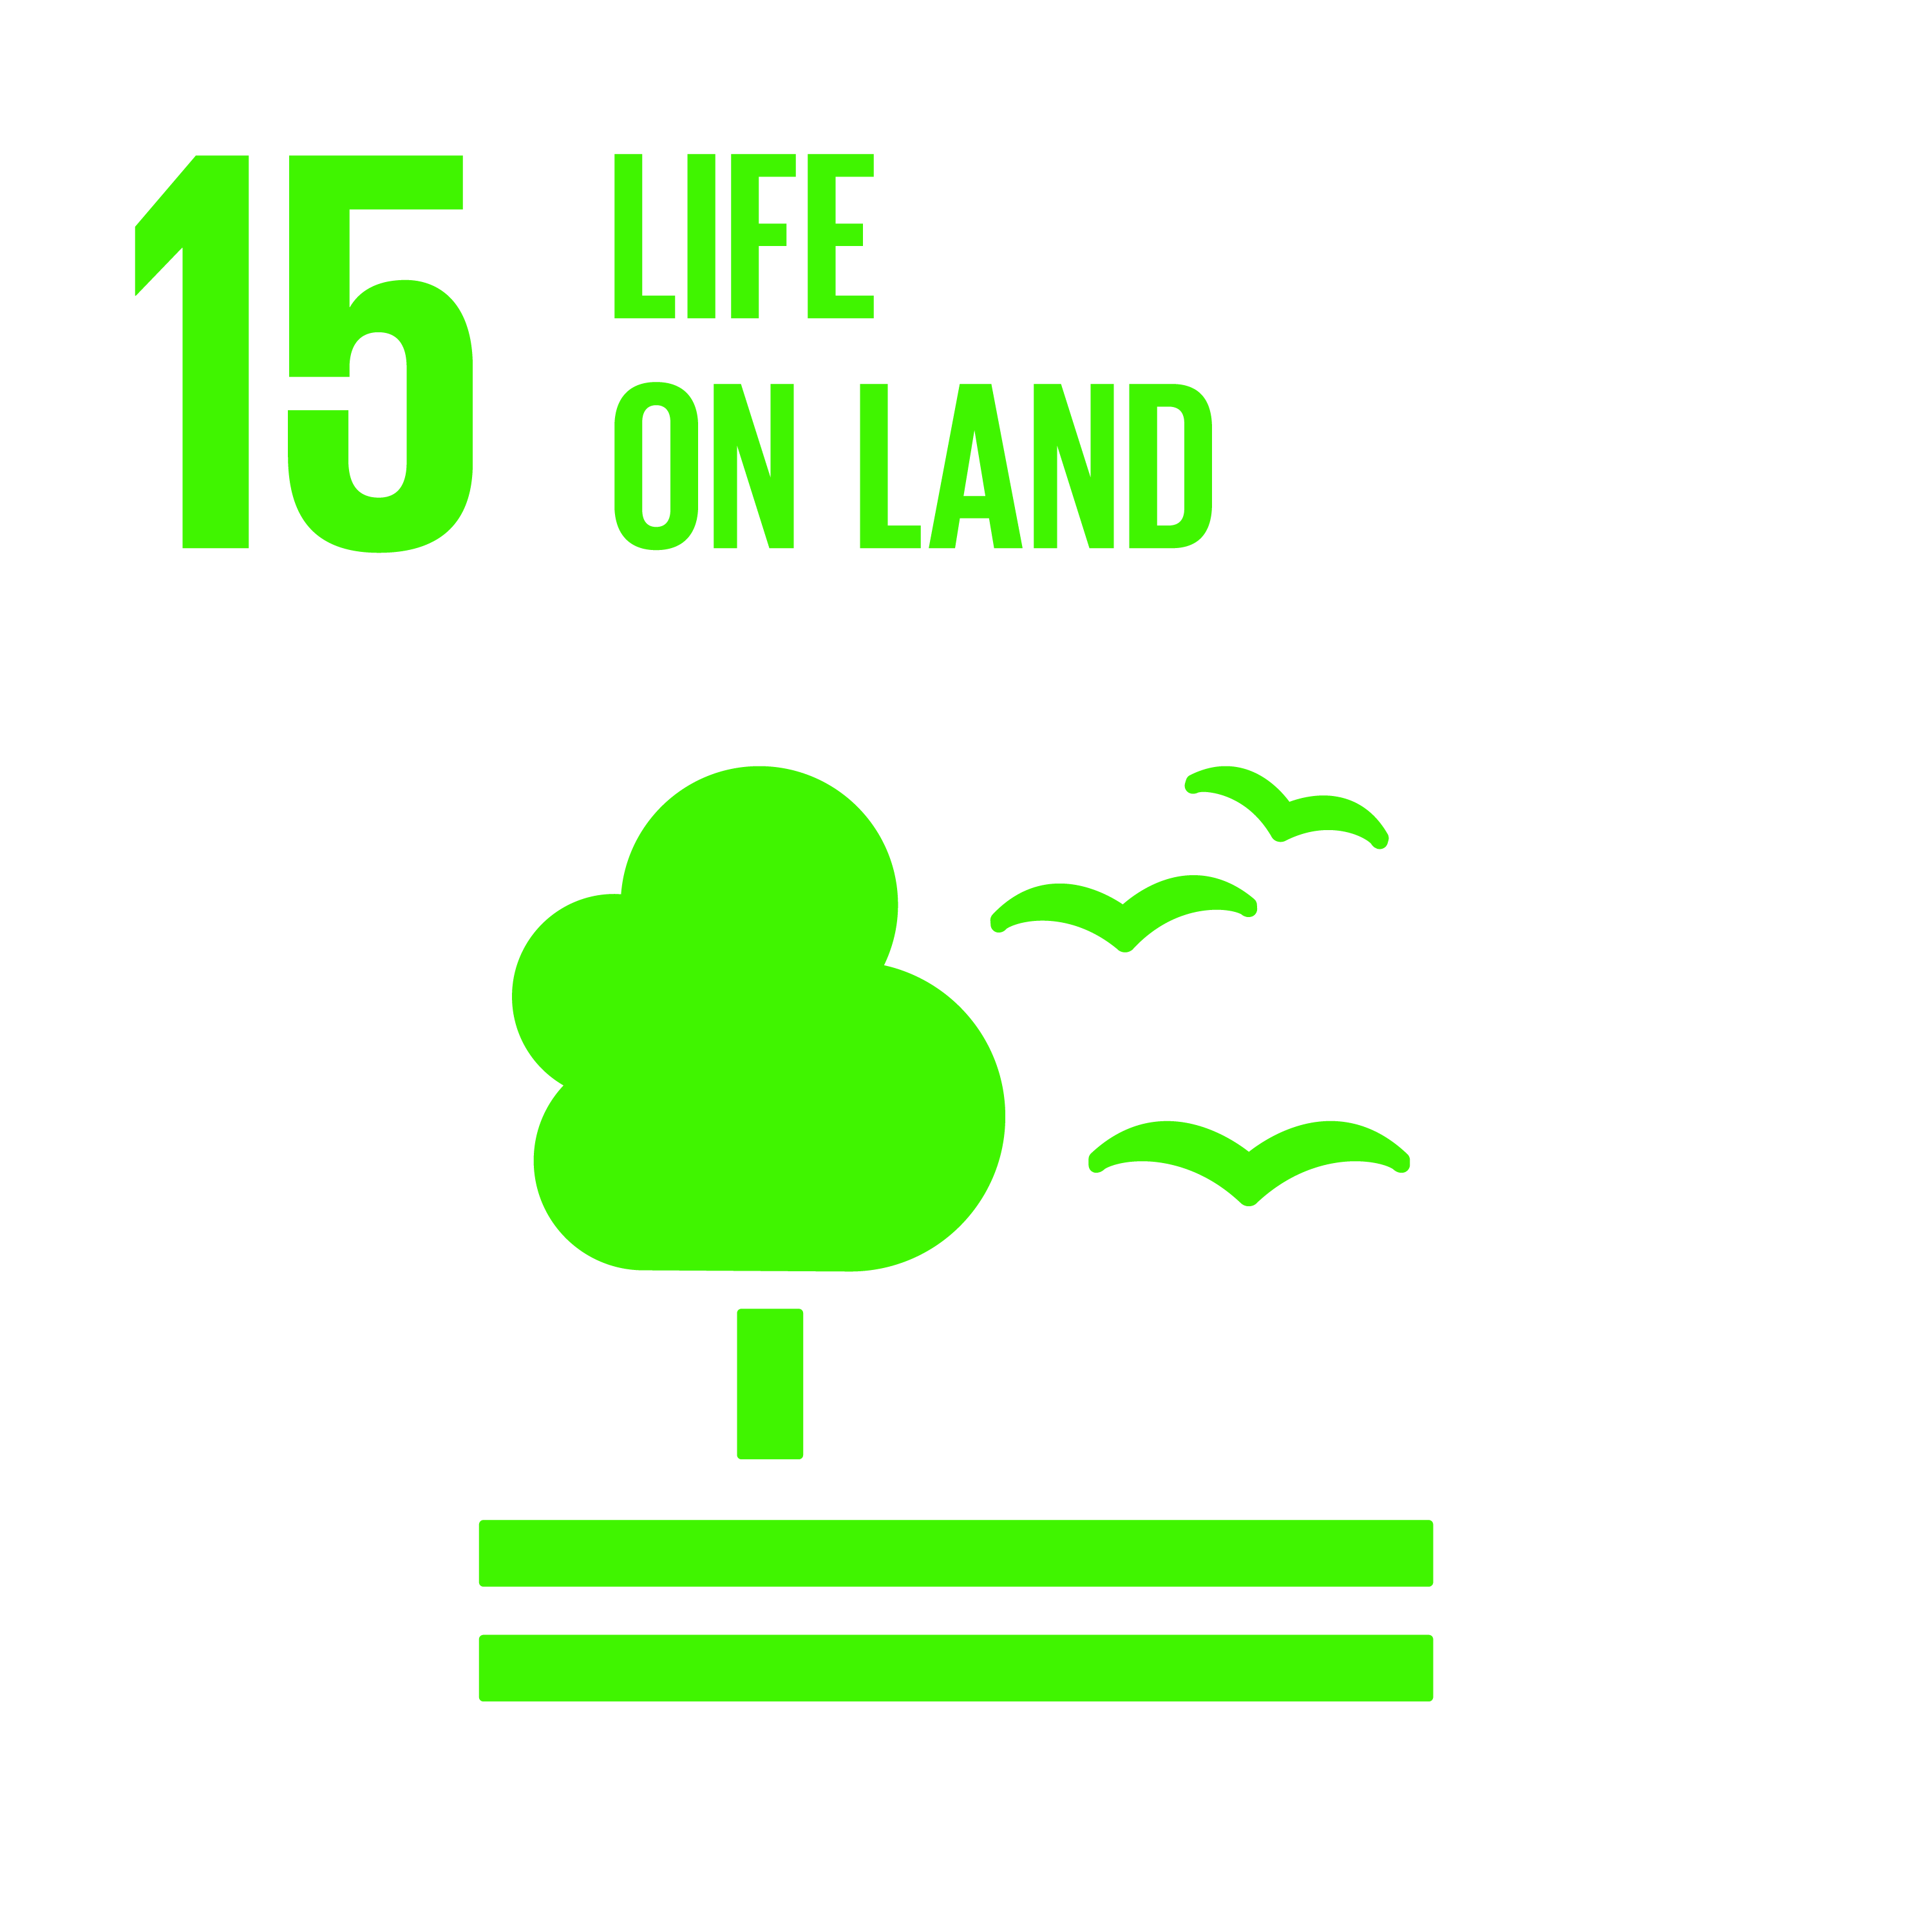 Sustainable development goals: Life on land